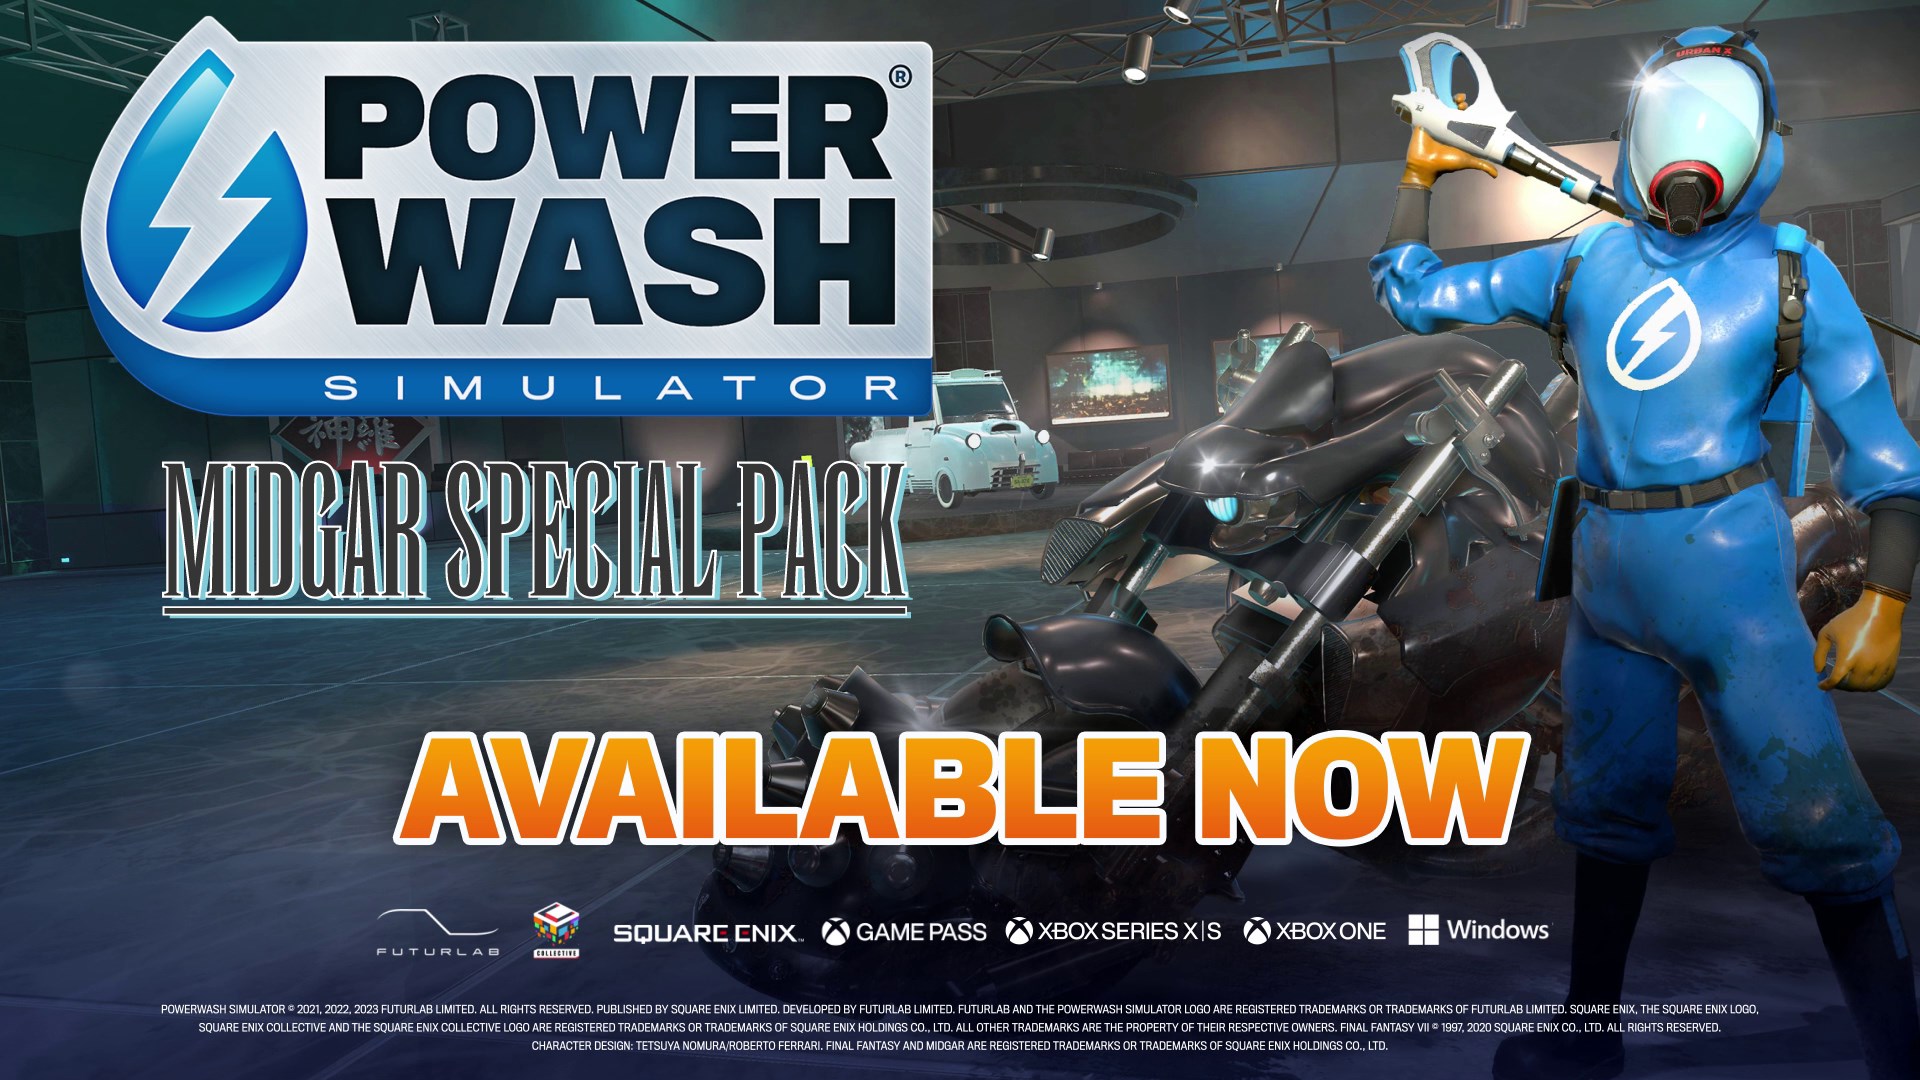 PowerWash Simulator's Midgar Special Pack Brings an AVALANCHE of